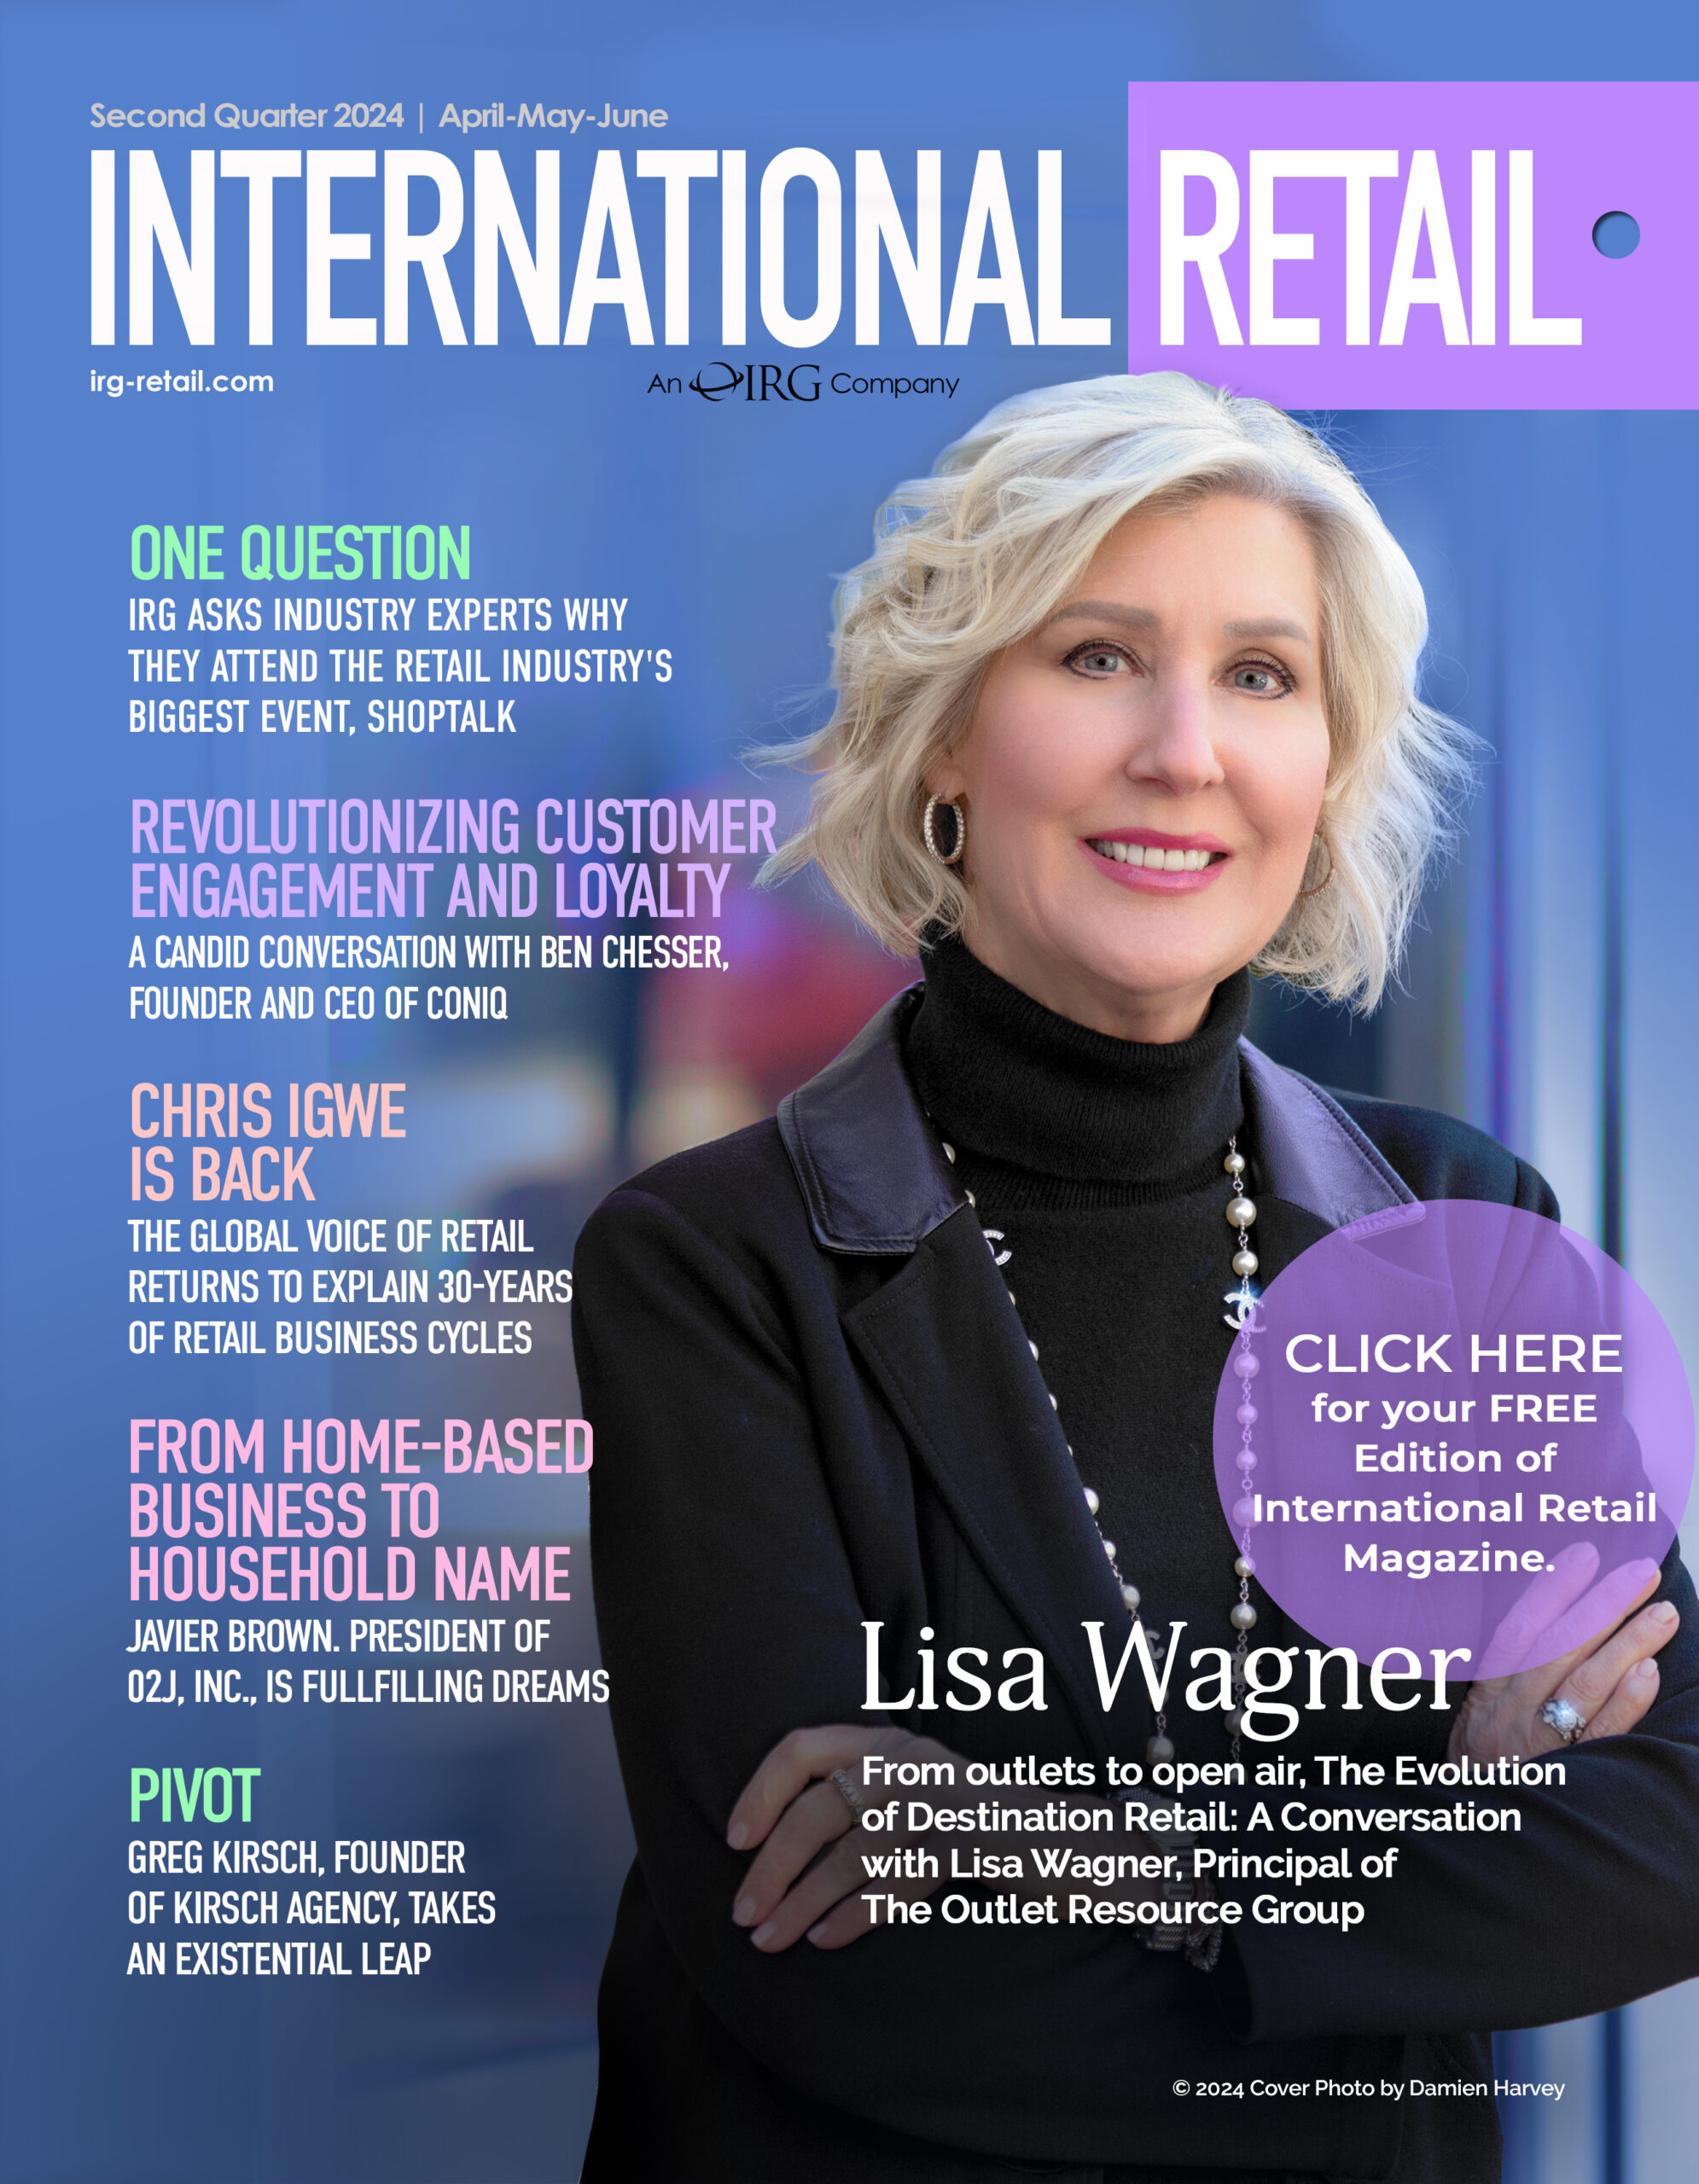 International Retail Magazine: Lisa Wagner of TORG | Second Quarter | April-May-June